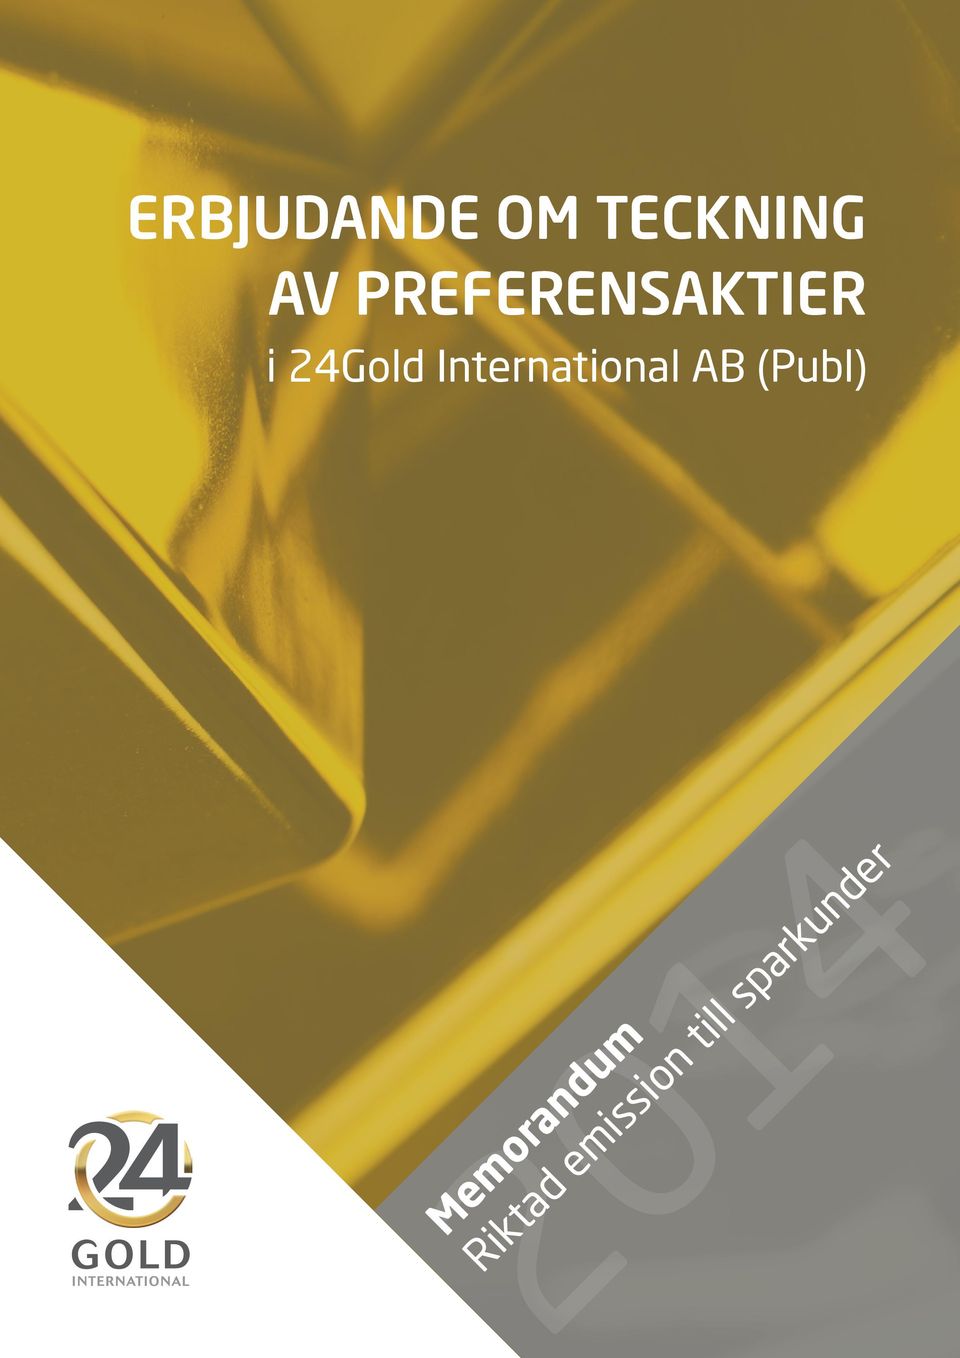 International AB (Publ) 2014